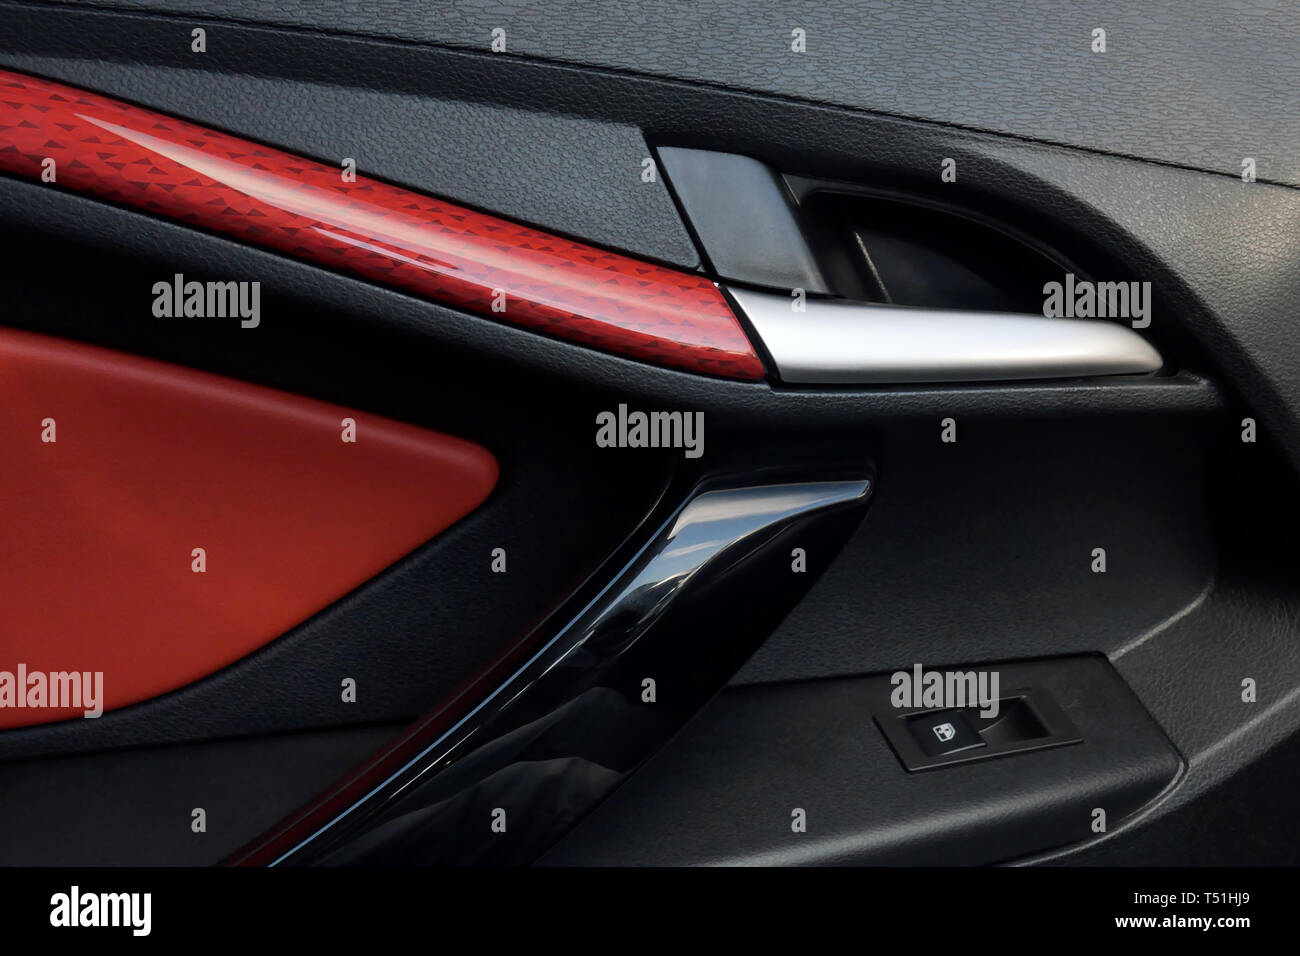 https://c8.alamy.com/compde/t51hj9/auto-turblatt-closeup-luxury-car-interior-von-innen-turgriff-t51hj9.jpg